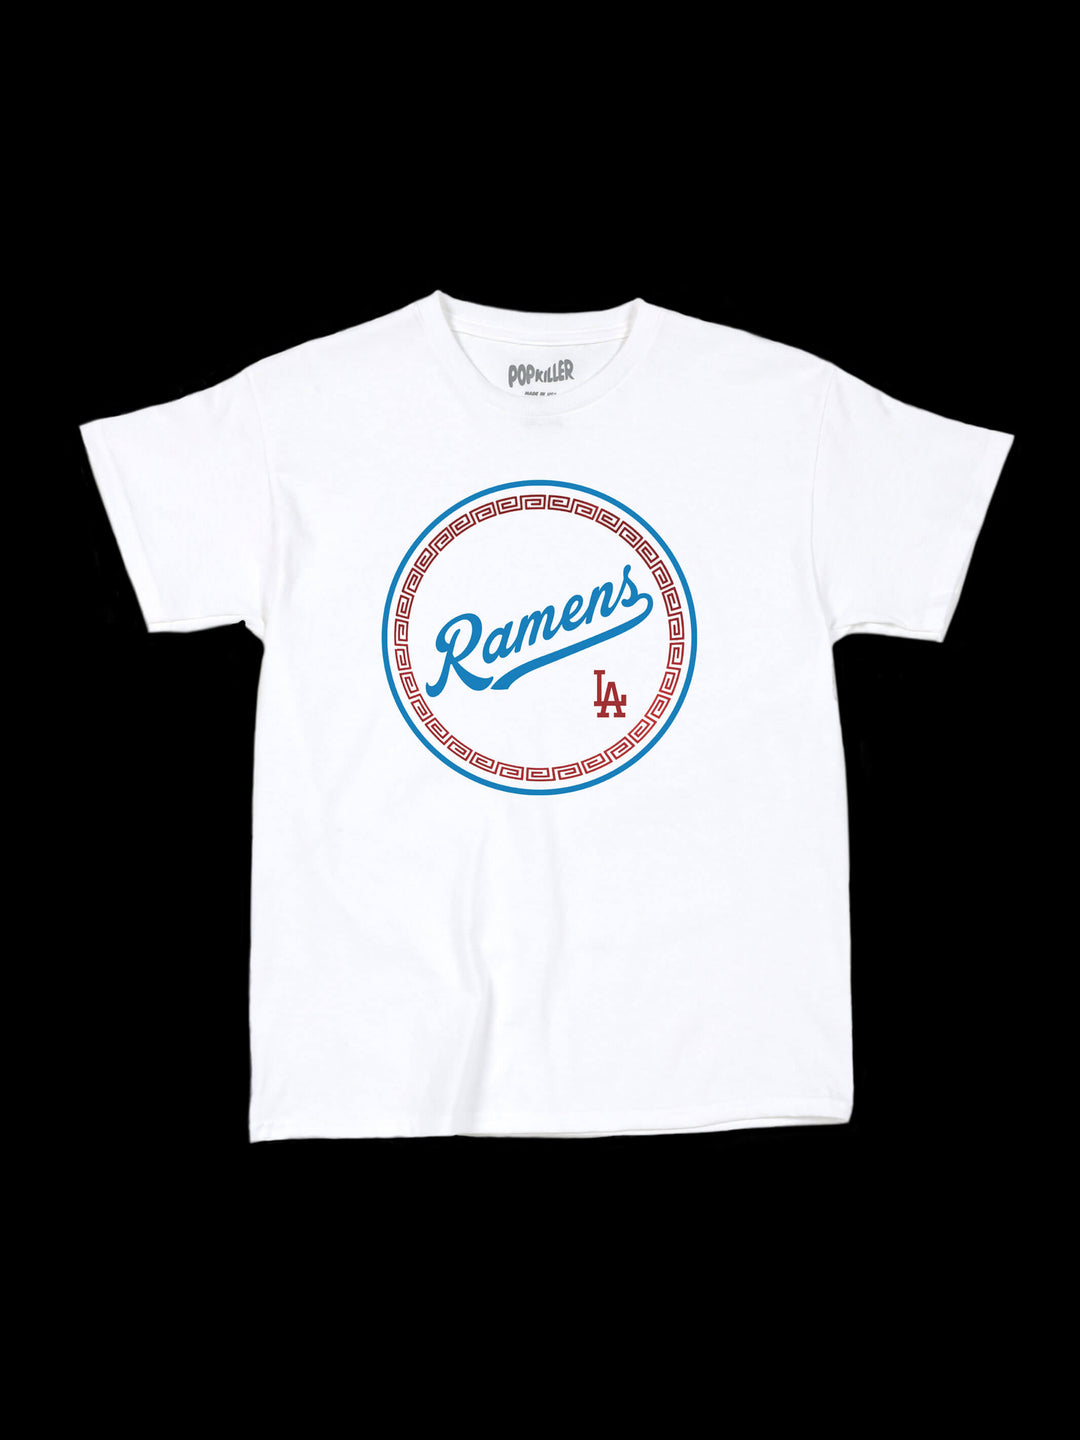 LA ramen Dodgers sport themed t-shirt.